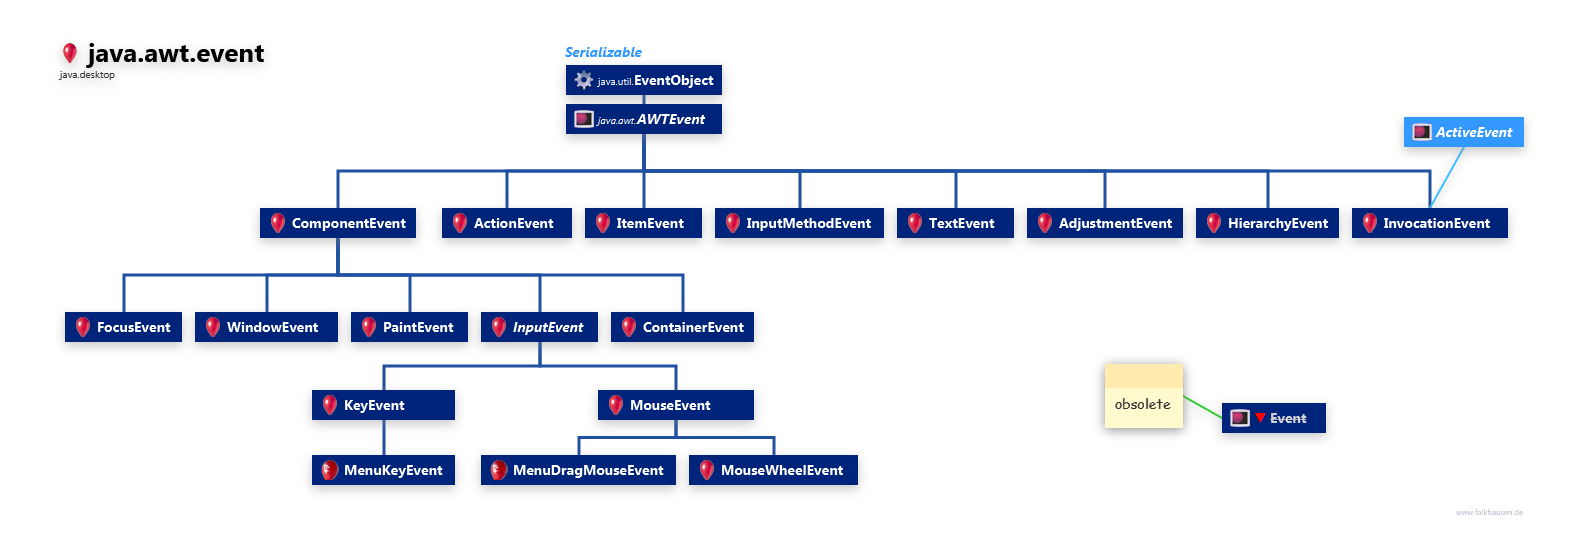 java.awt.event Event Hierarchy class diagram and api documentation for Java 10